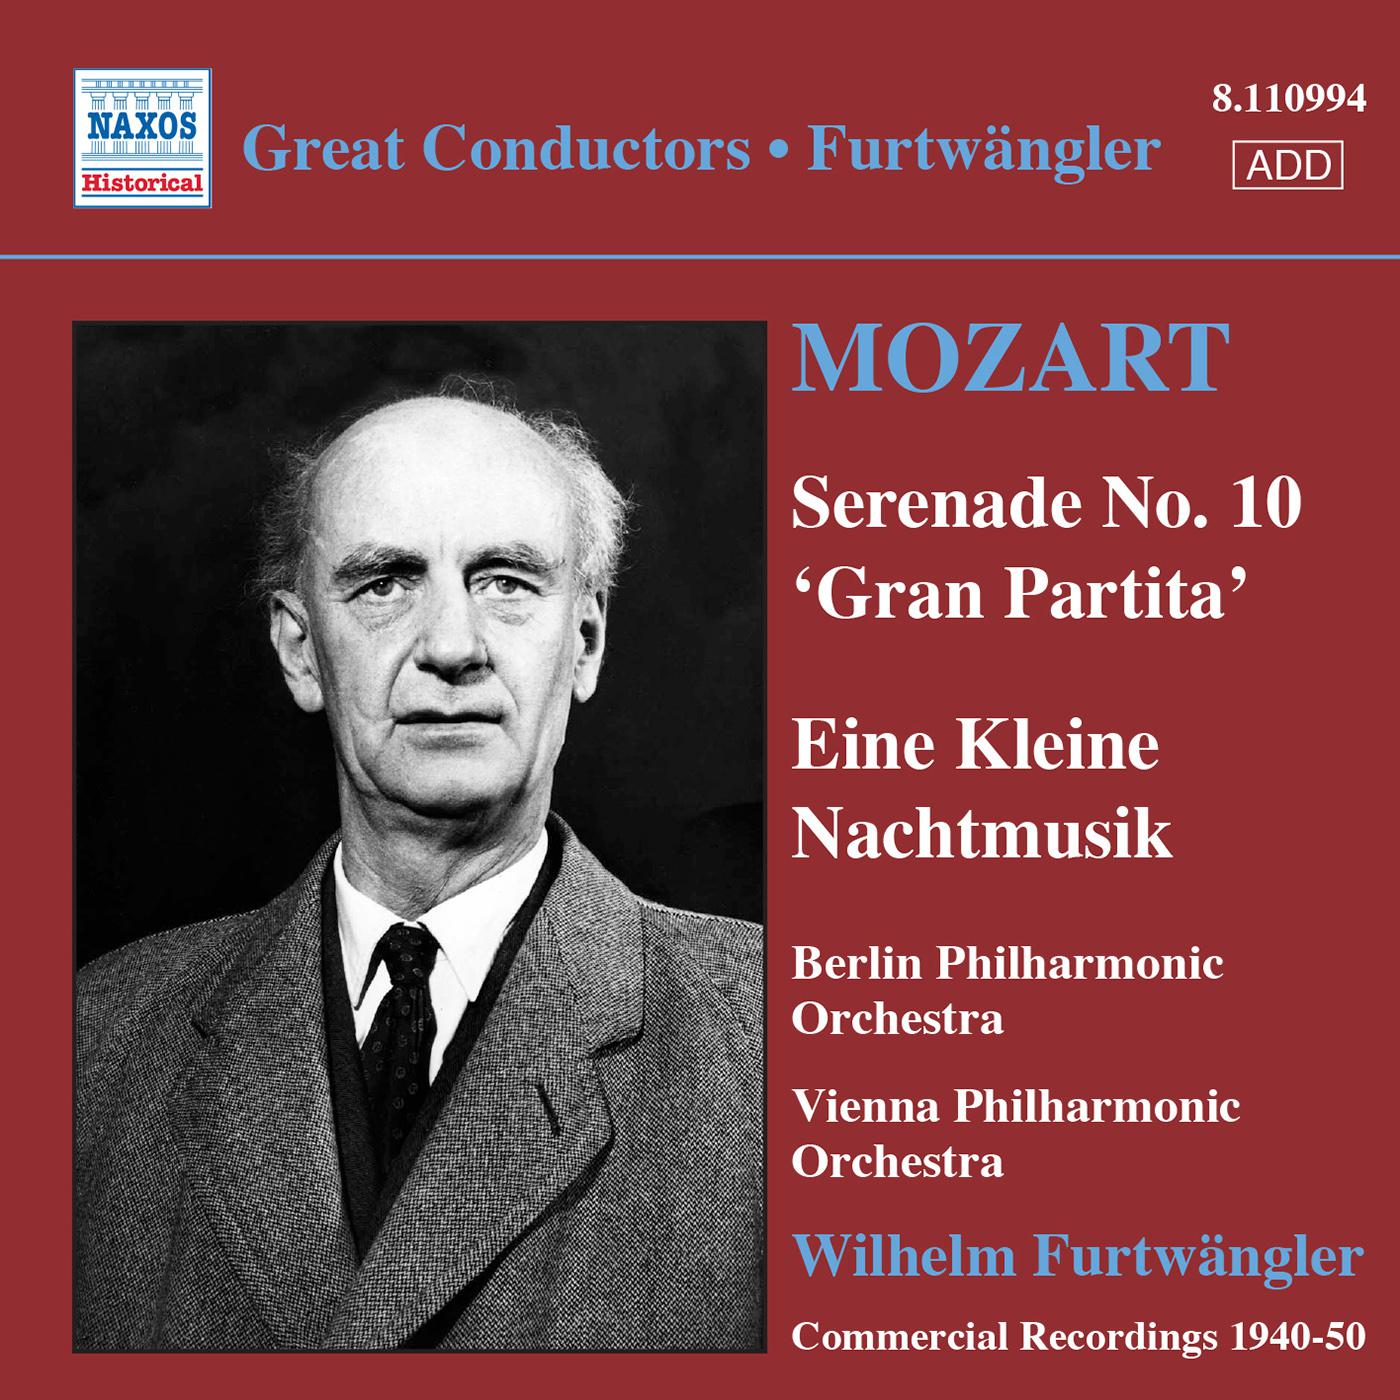 MOZART: Serenades Nos. 10 and 13 (Furtwangler, Commercial Recordings 1940-50, Vol. 1)